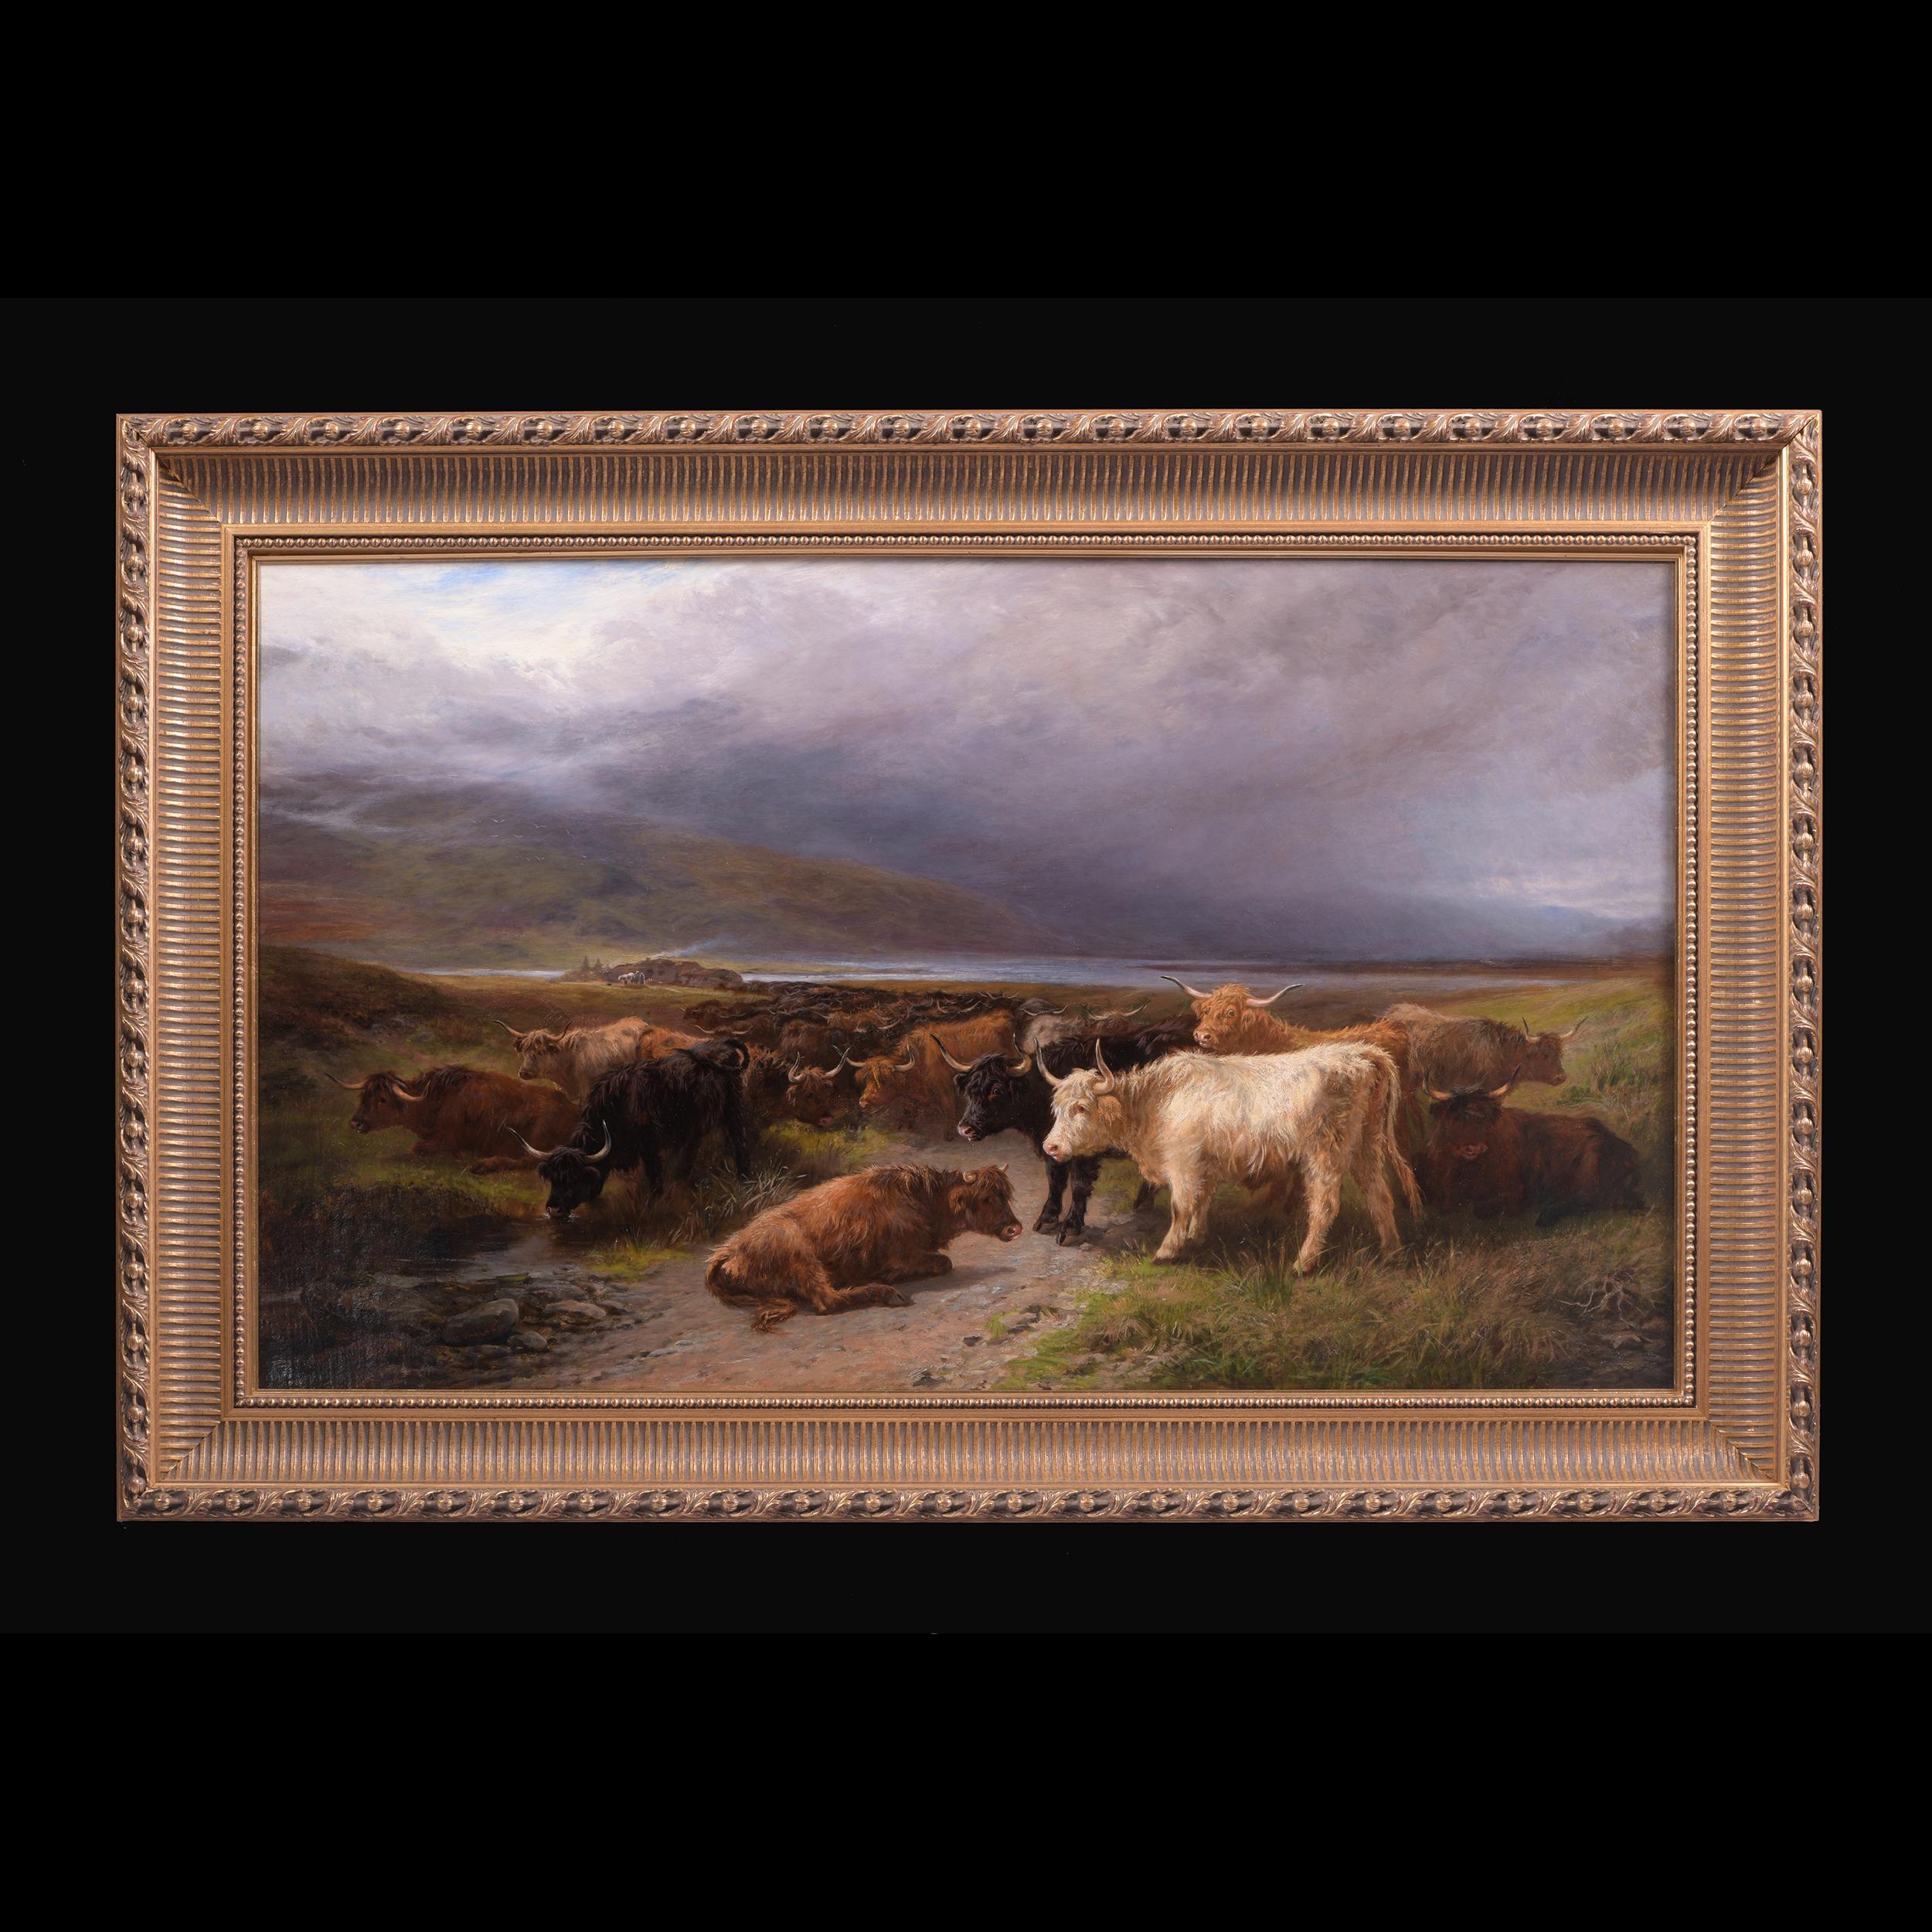 A magnificent pair of Scottish cattle highland scenes by Henry Garland in modern gilt frames...

Artist: Henry Garland (1834-1913), British

Title: 